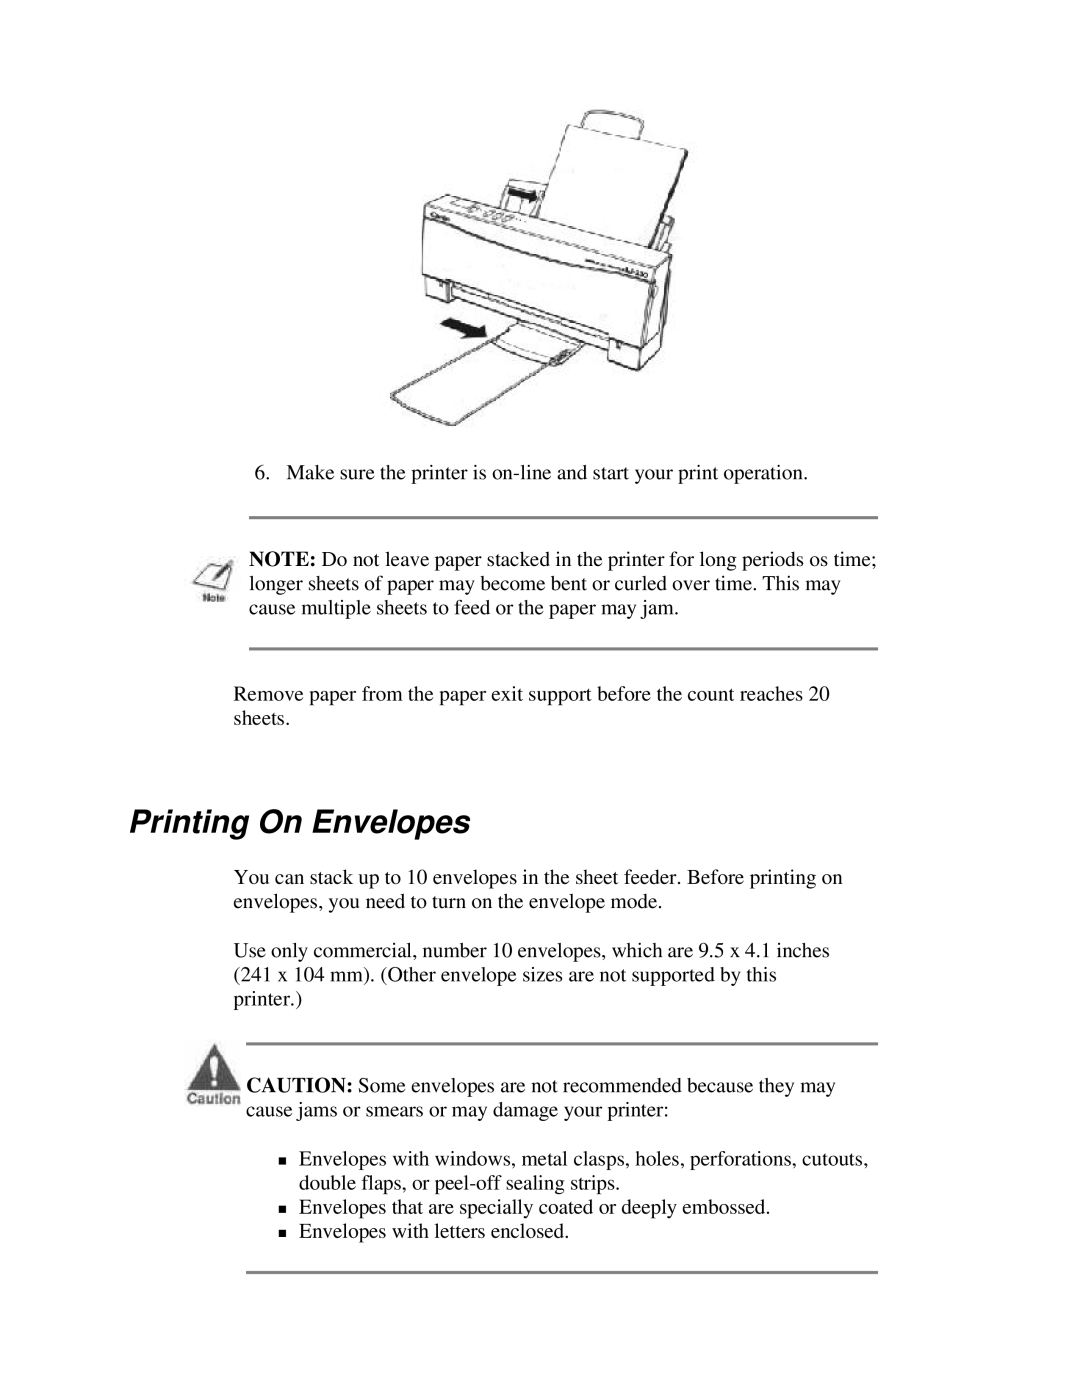 Canon BJ-230 user manual Printing On Envelopes 